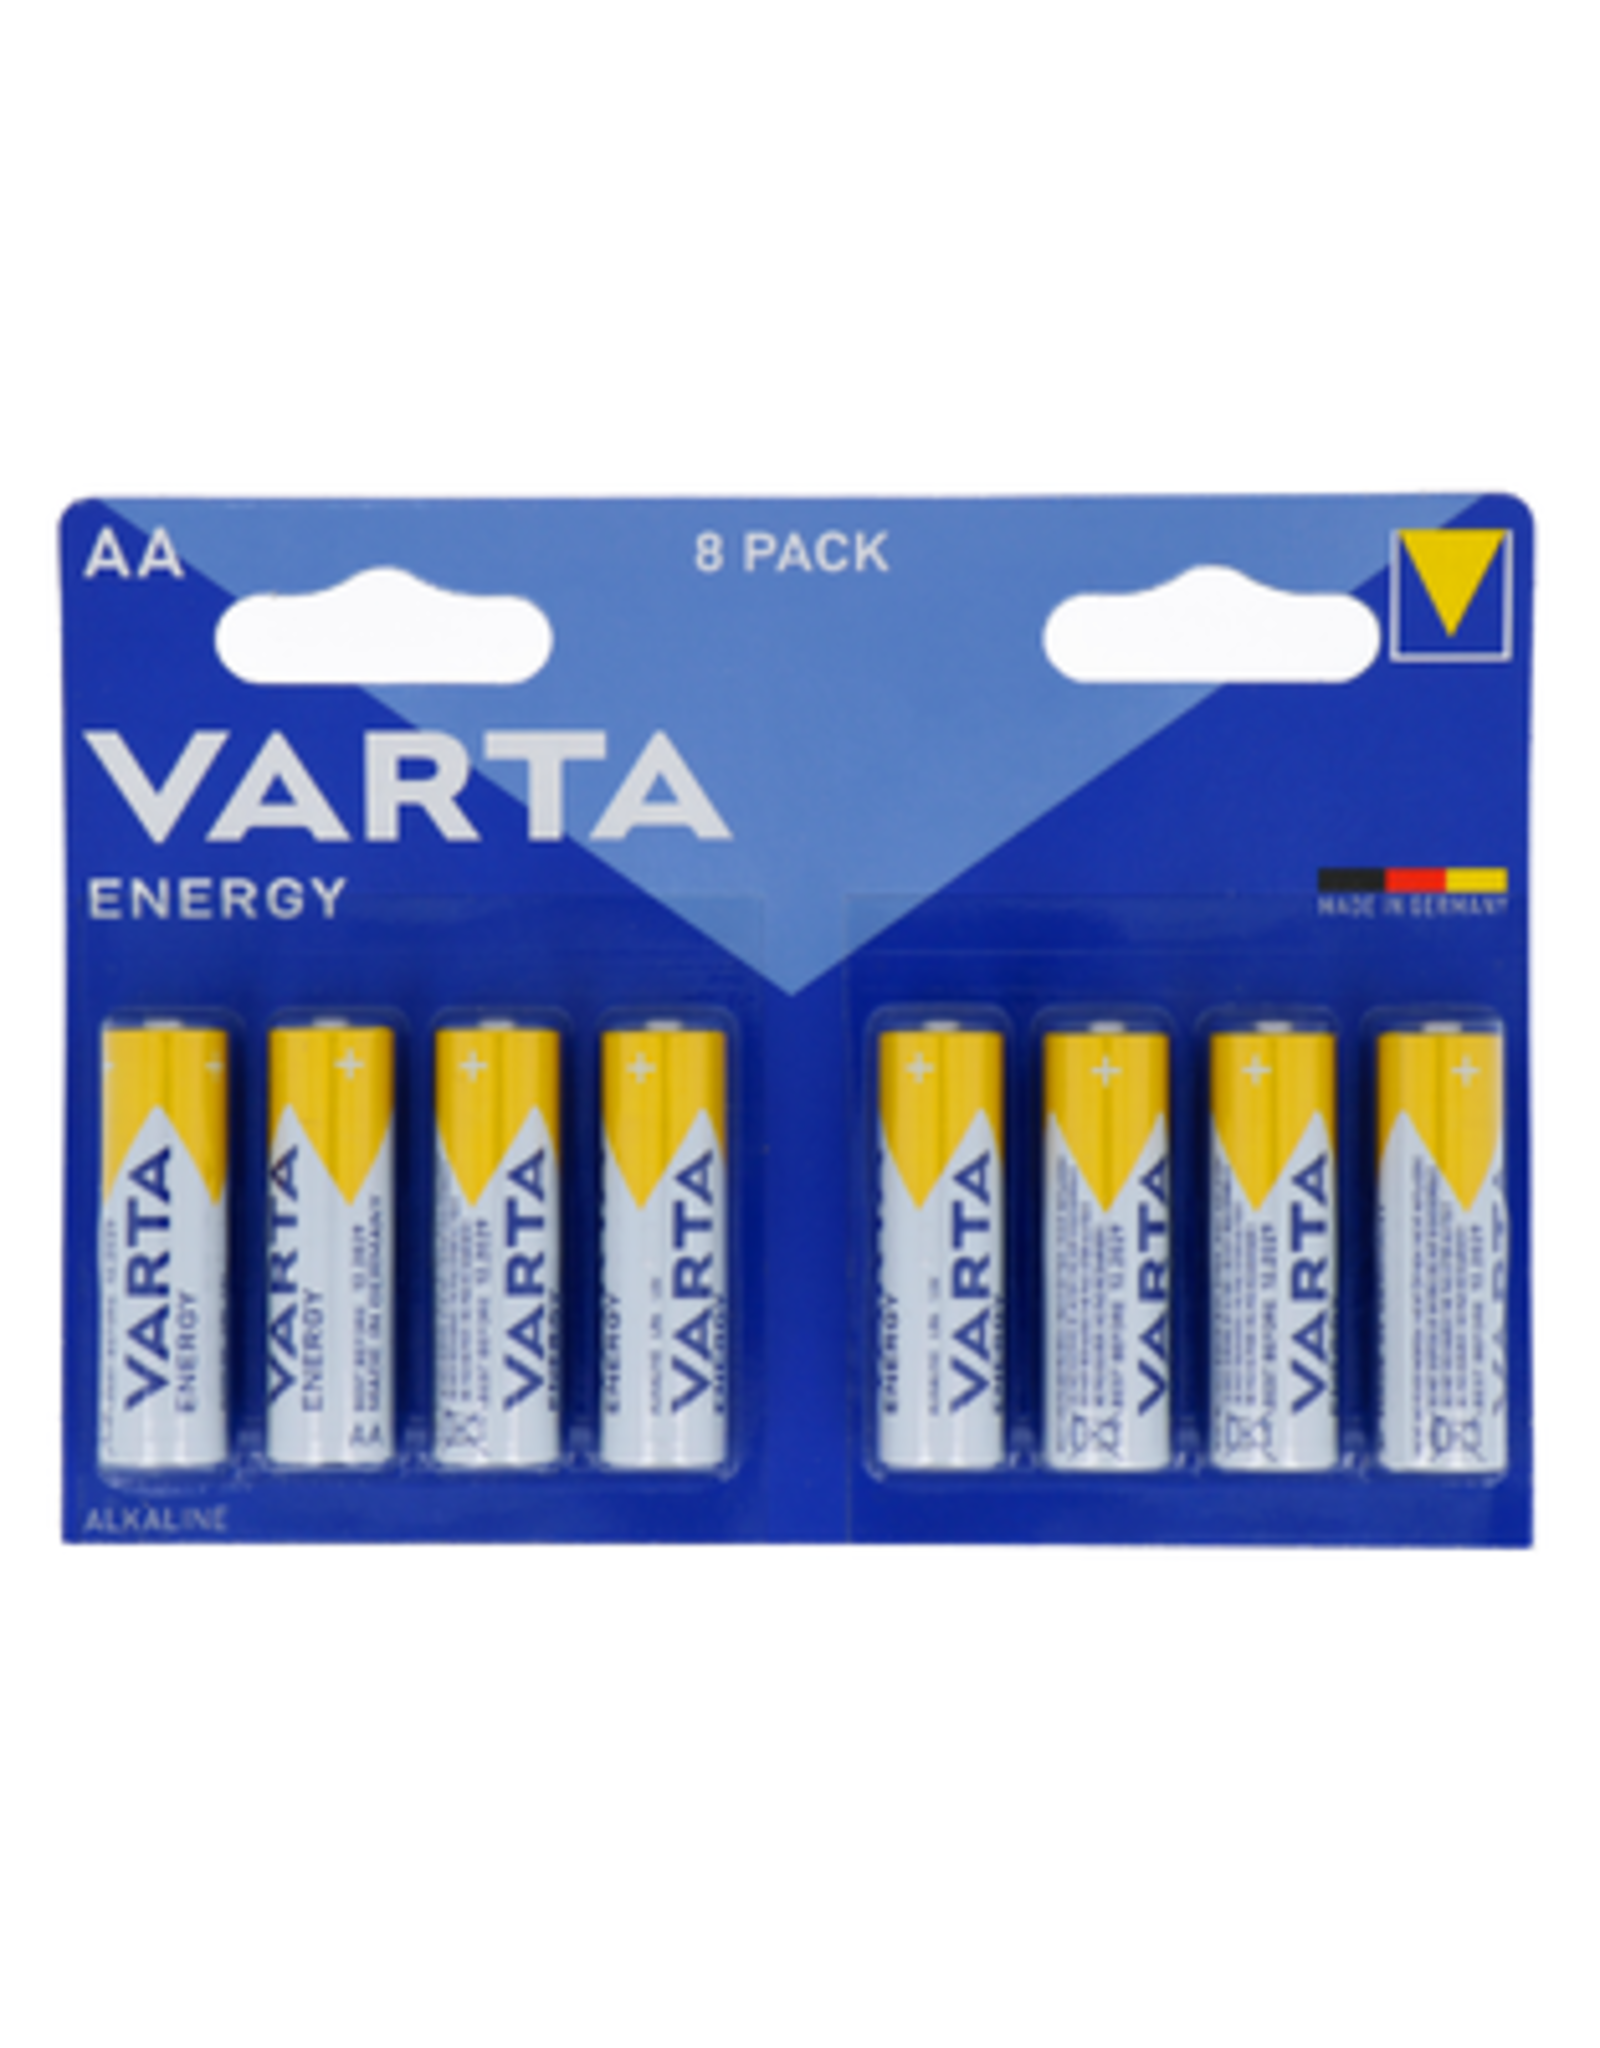 VARTA Varta Energy AA Batterijen 8ST